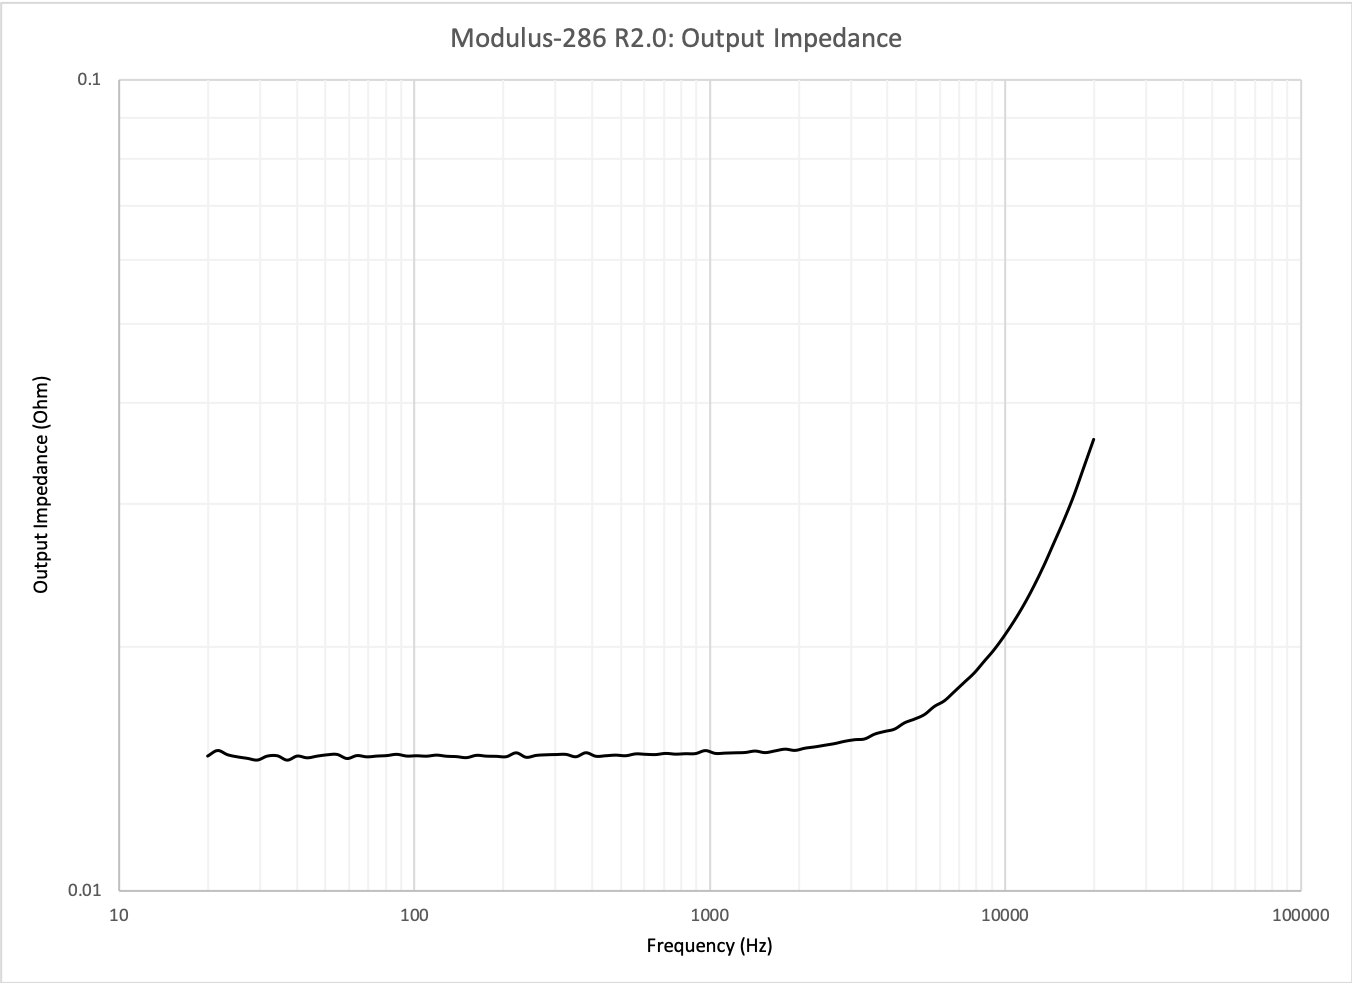 Modulus-286 output impedance